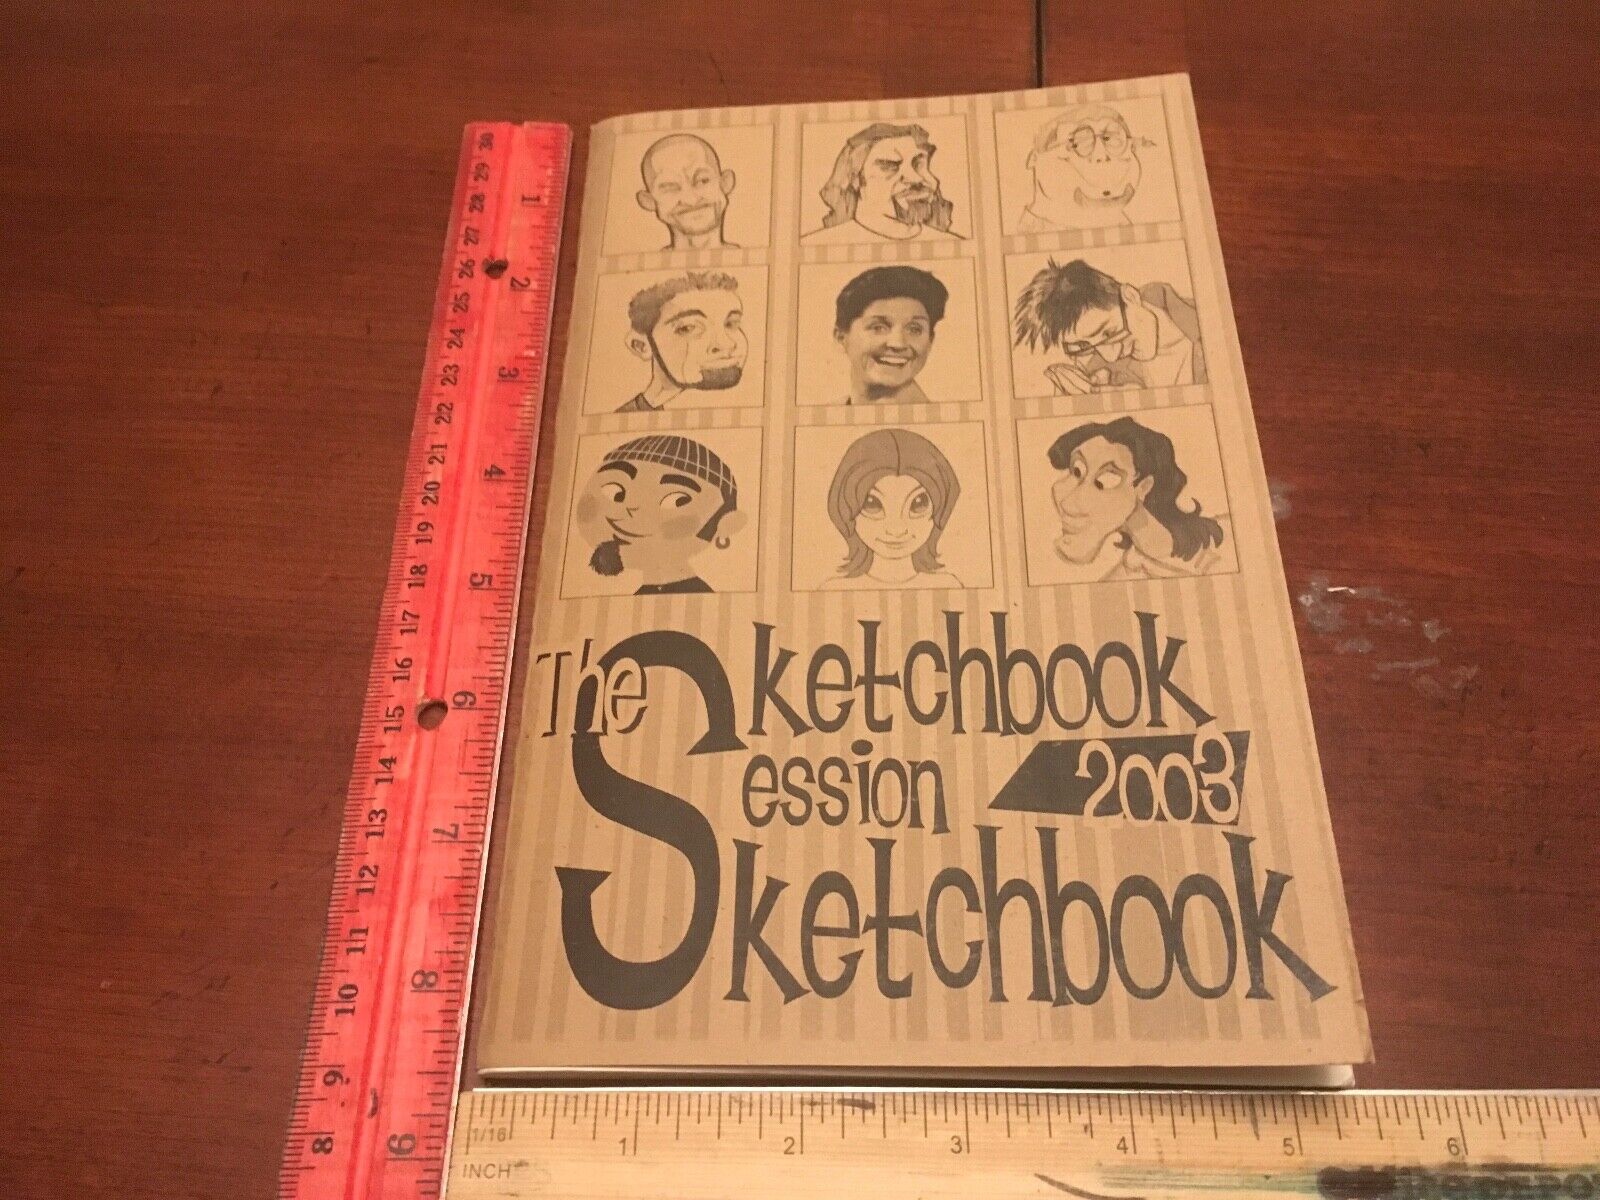 The Sketchbook Session Sketchbook 2003 – Comic Con 2003, signed by 6 artist